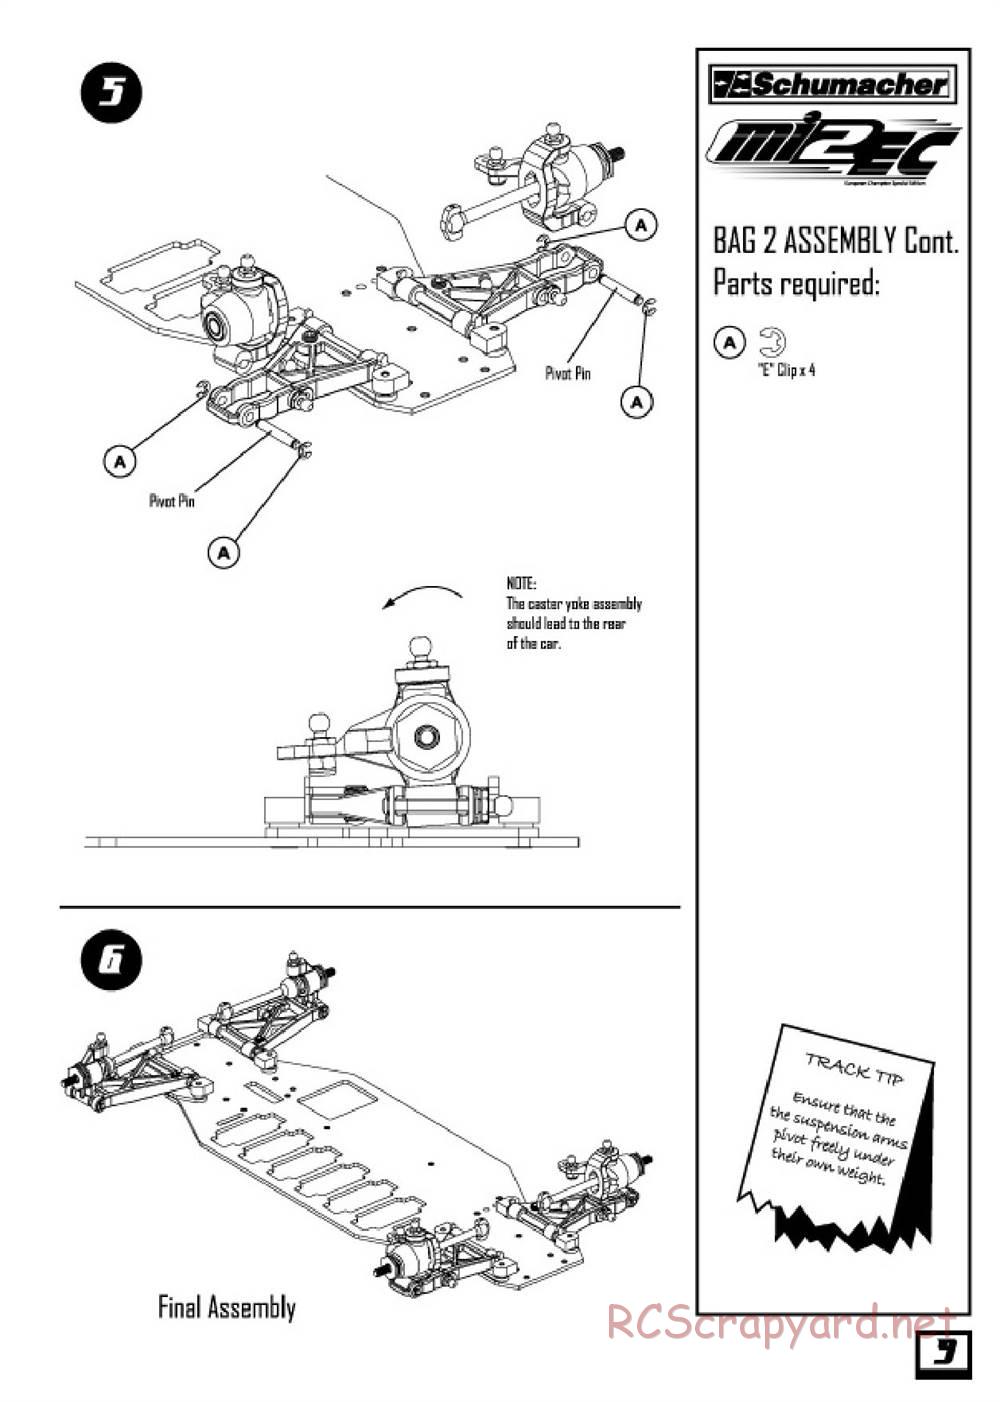 Schumacher - Mi2 EC - Manual - Page 11